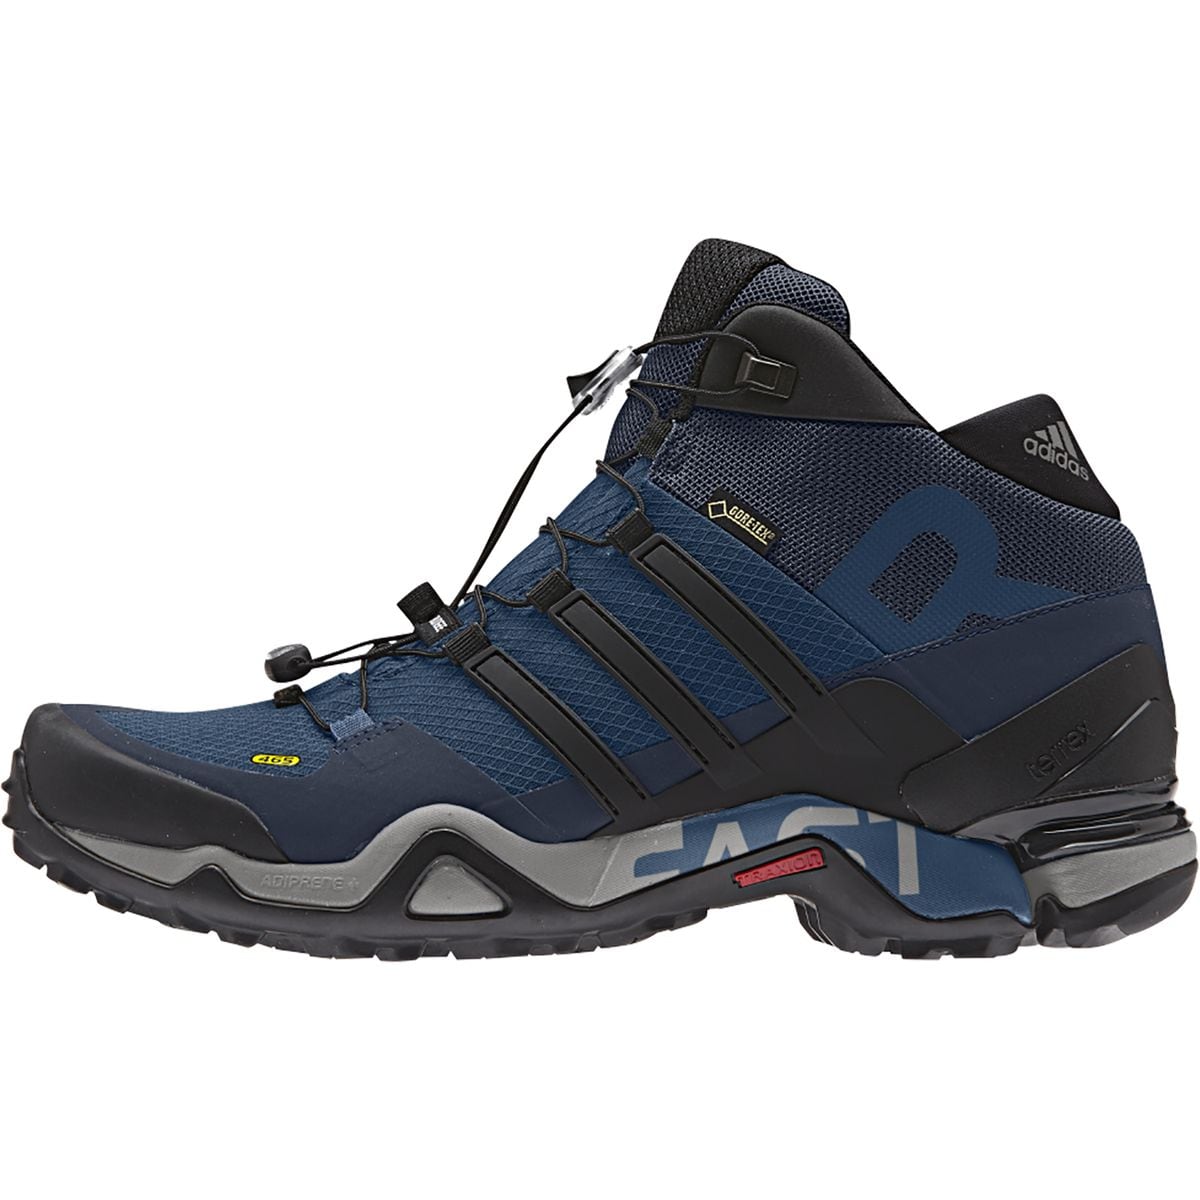 Adidas Outdoor Terrex Fast R Mid GTX Hiking Boot - Men's | eBay